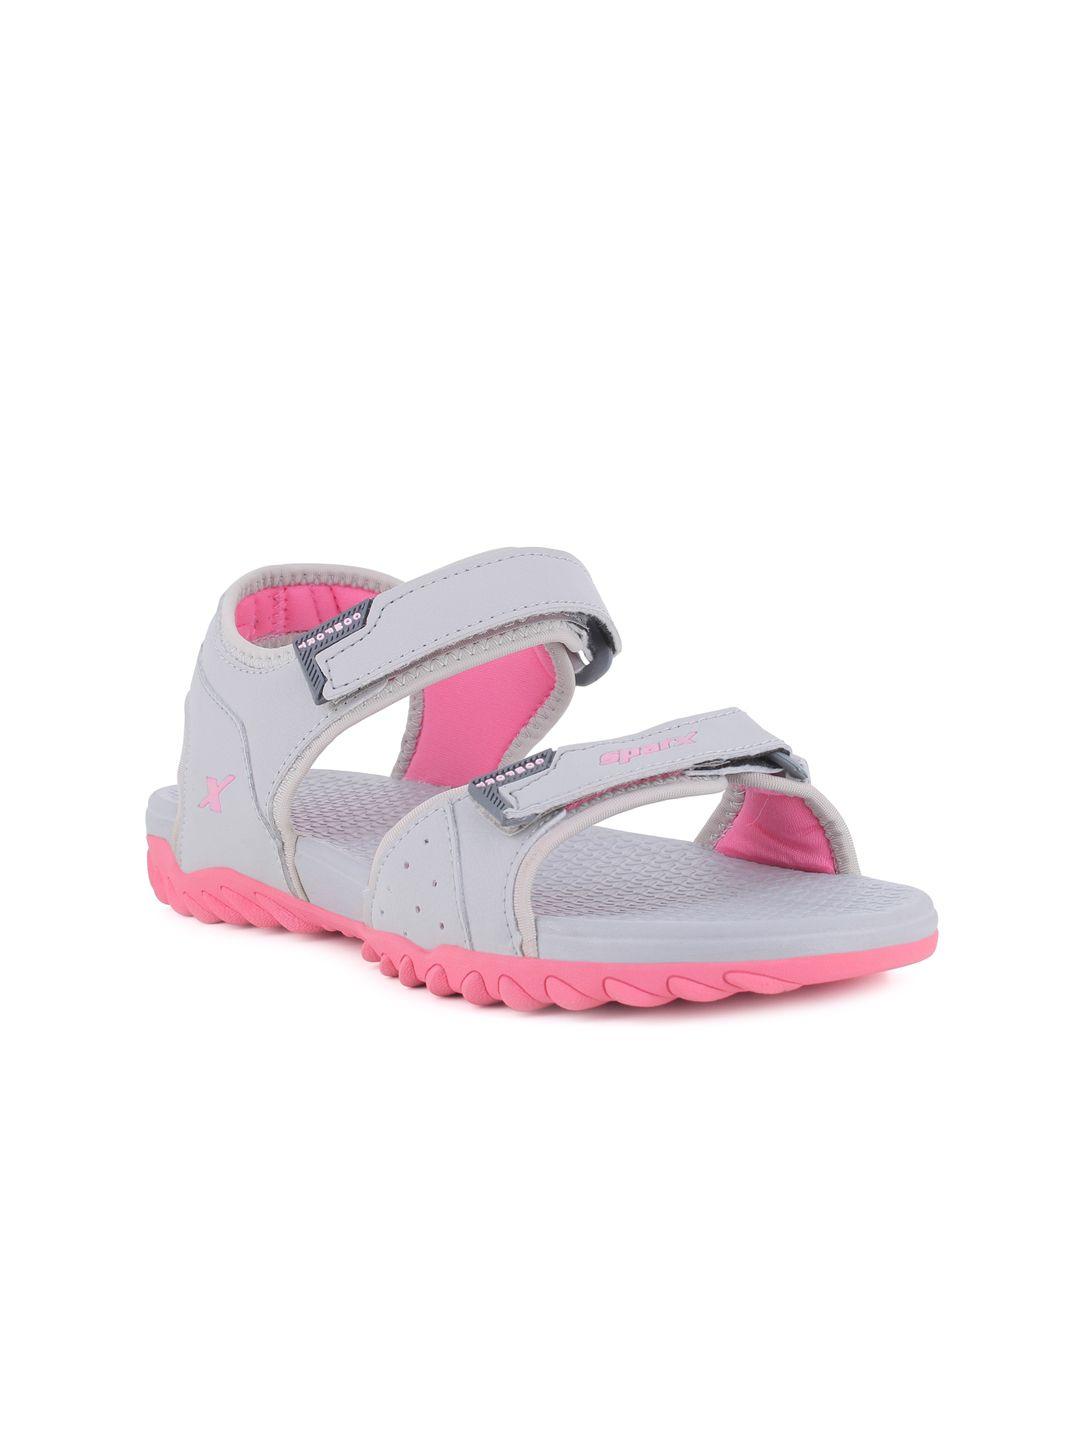 sparx women grey & pink floater sandals